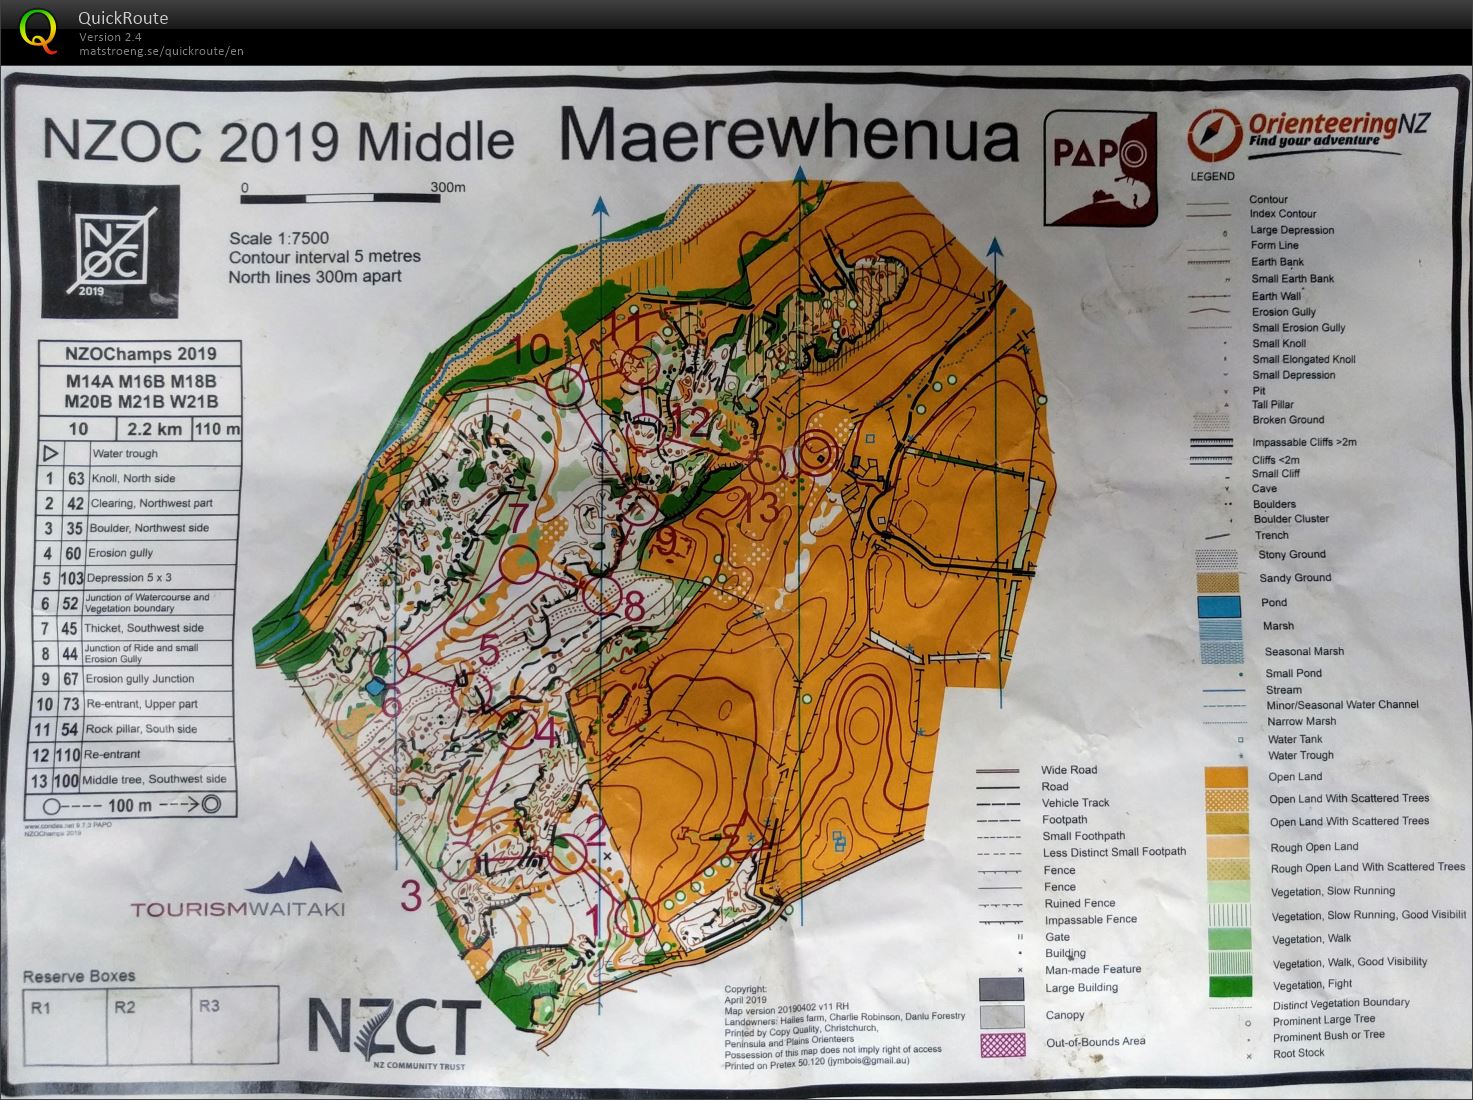 NZOC 2019 Middle Maerewhenua - W21B (21/04/2019)